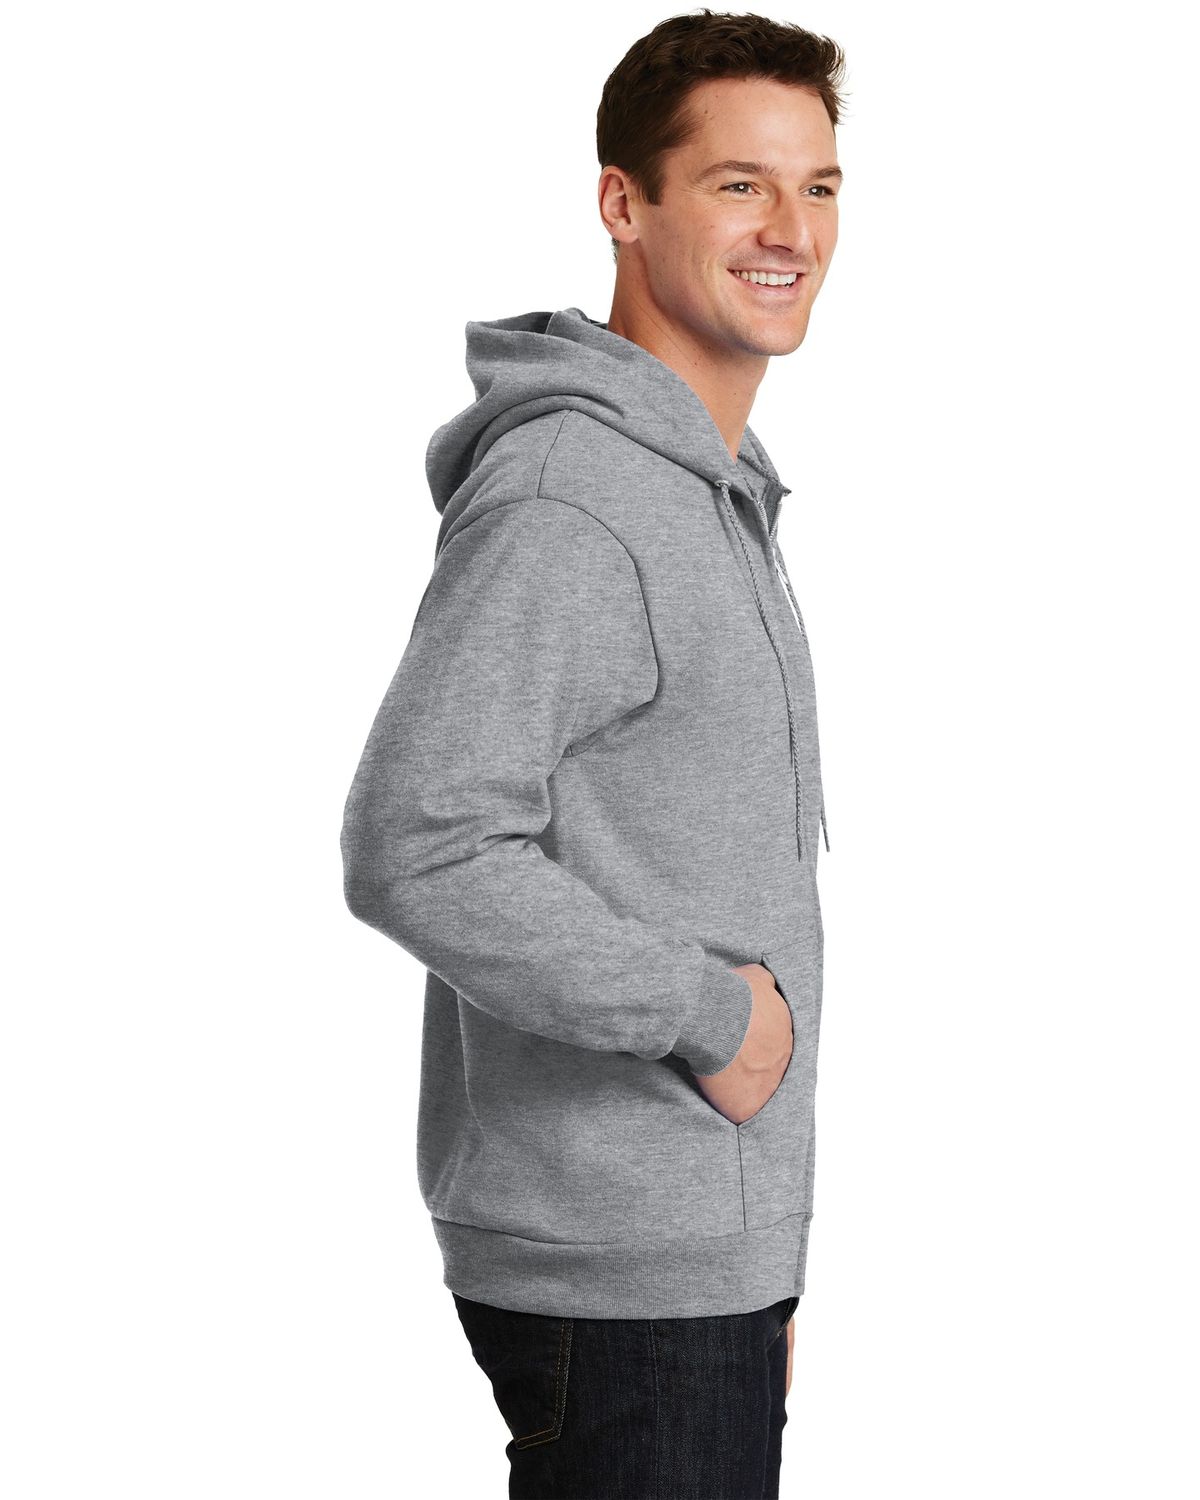 'Port & Company PC90ZH Essential Fleece Full-Zip Hooded Sweatshirt'